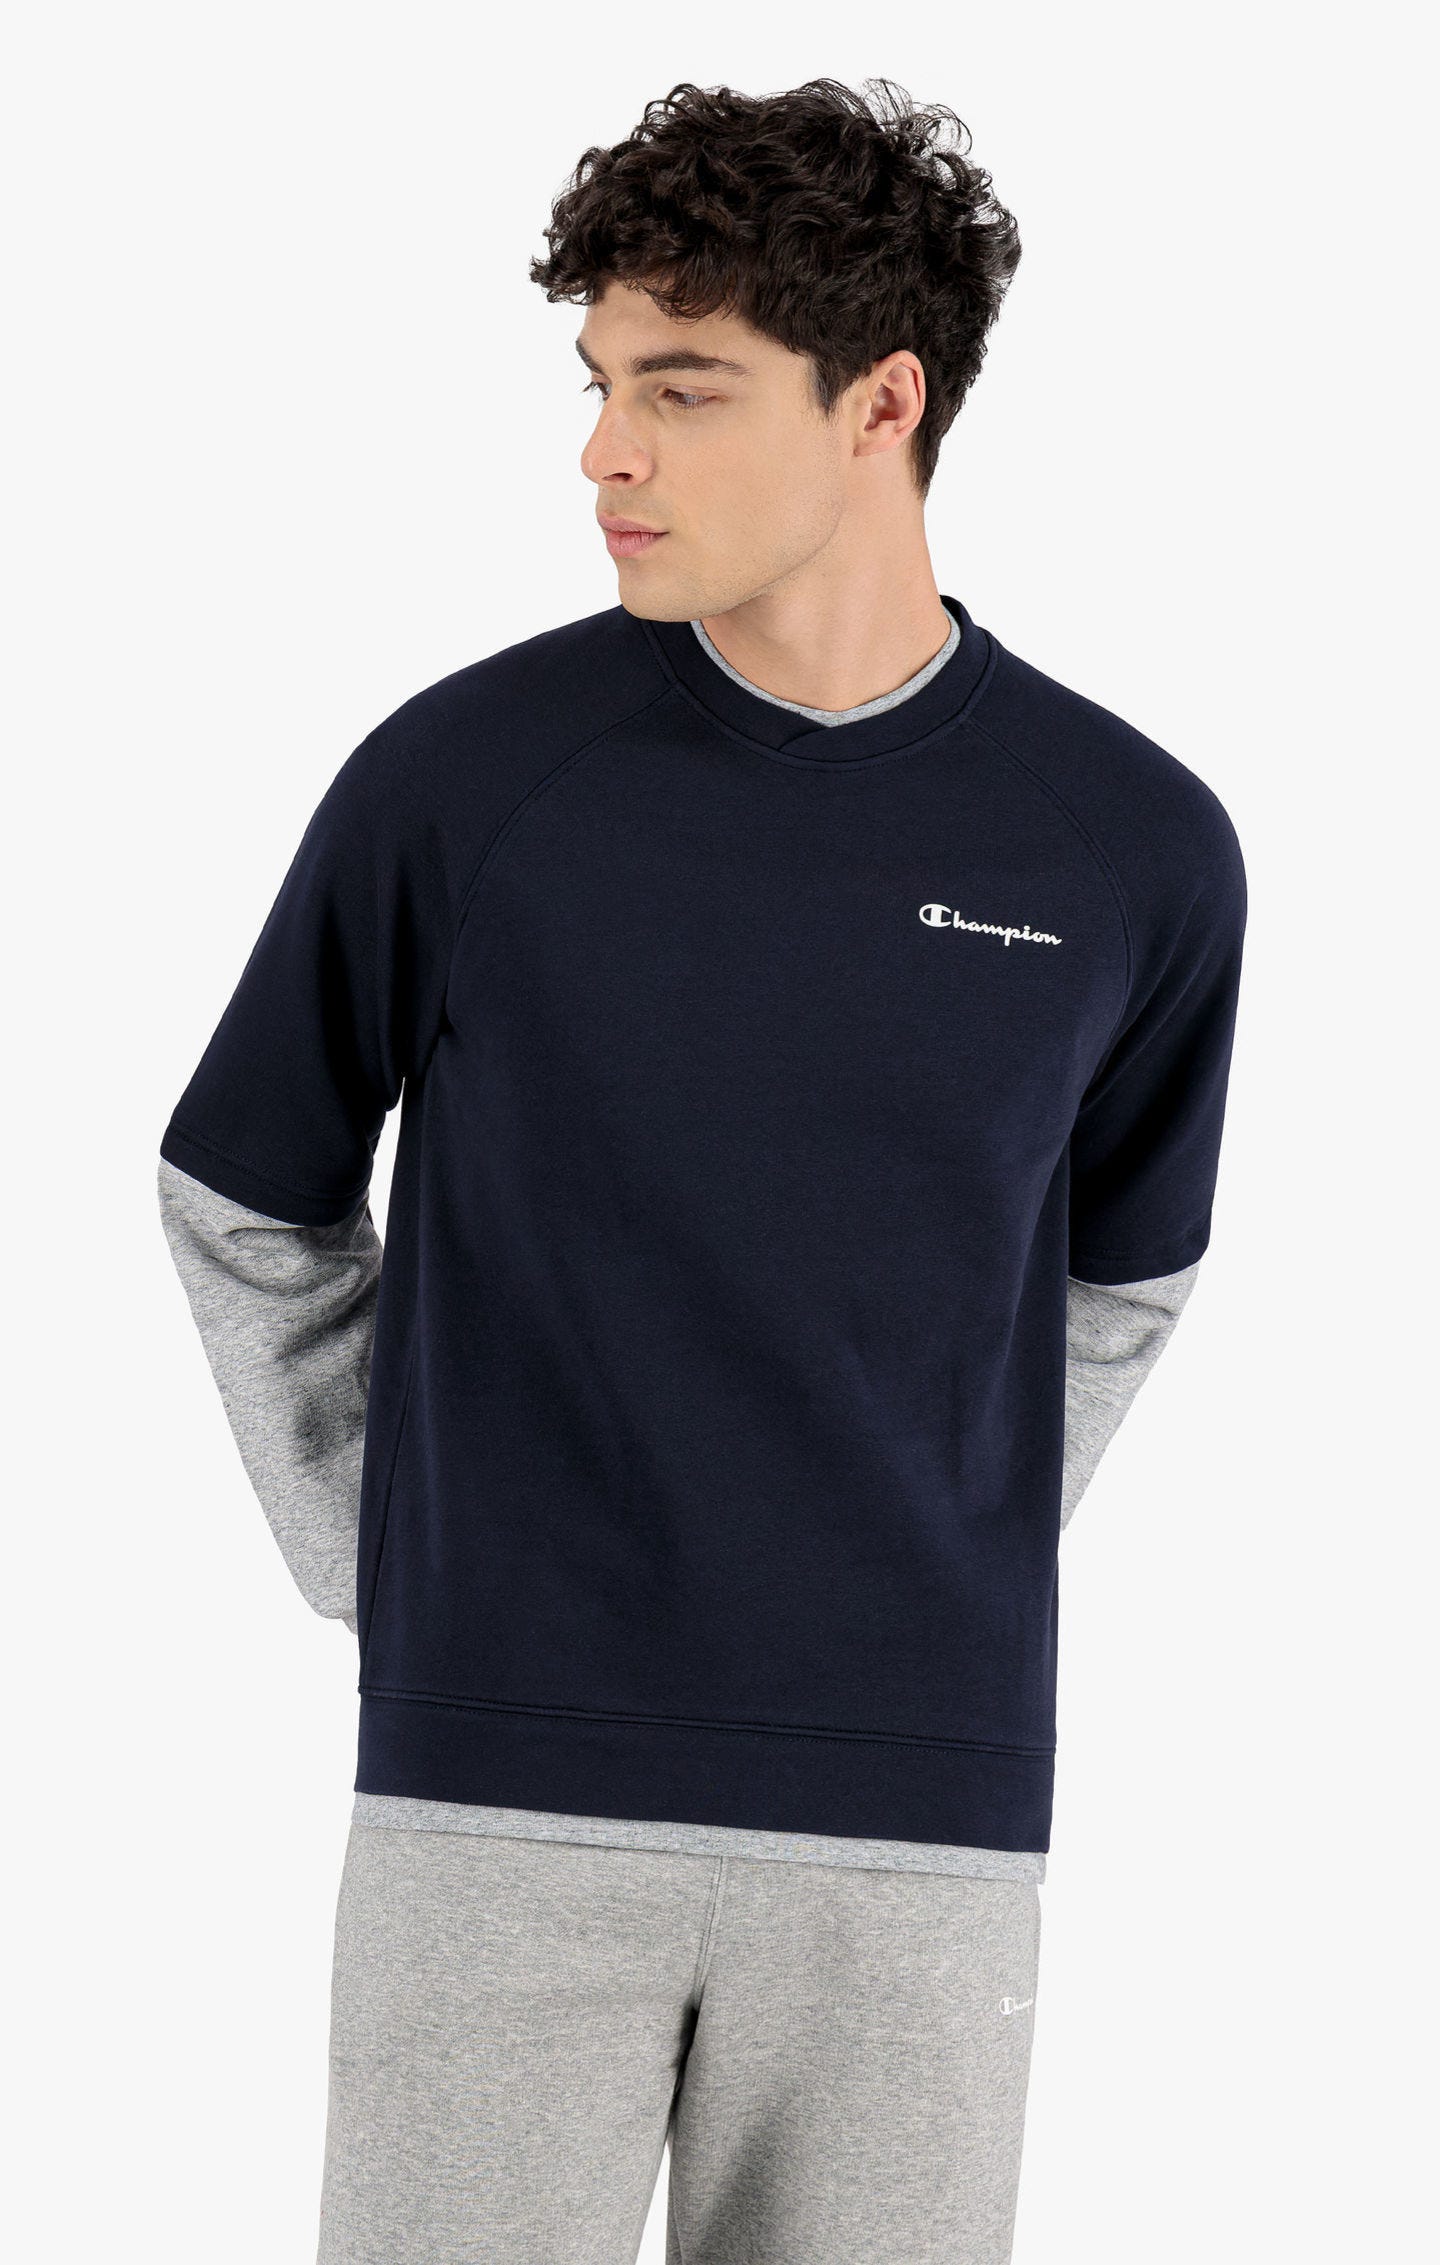 Contrast Layered Small Script Logo Sweatshirt